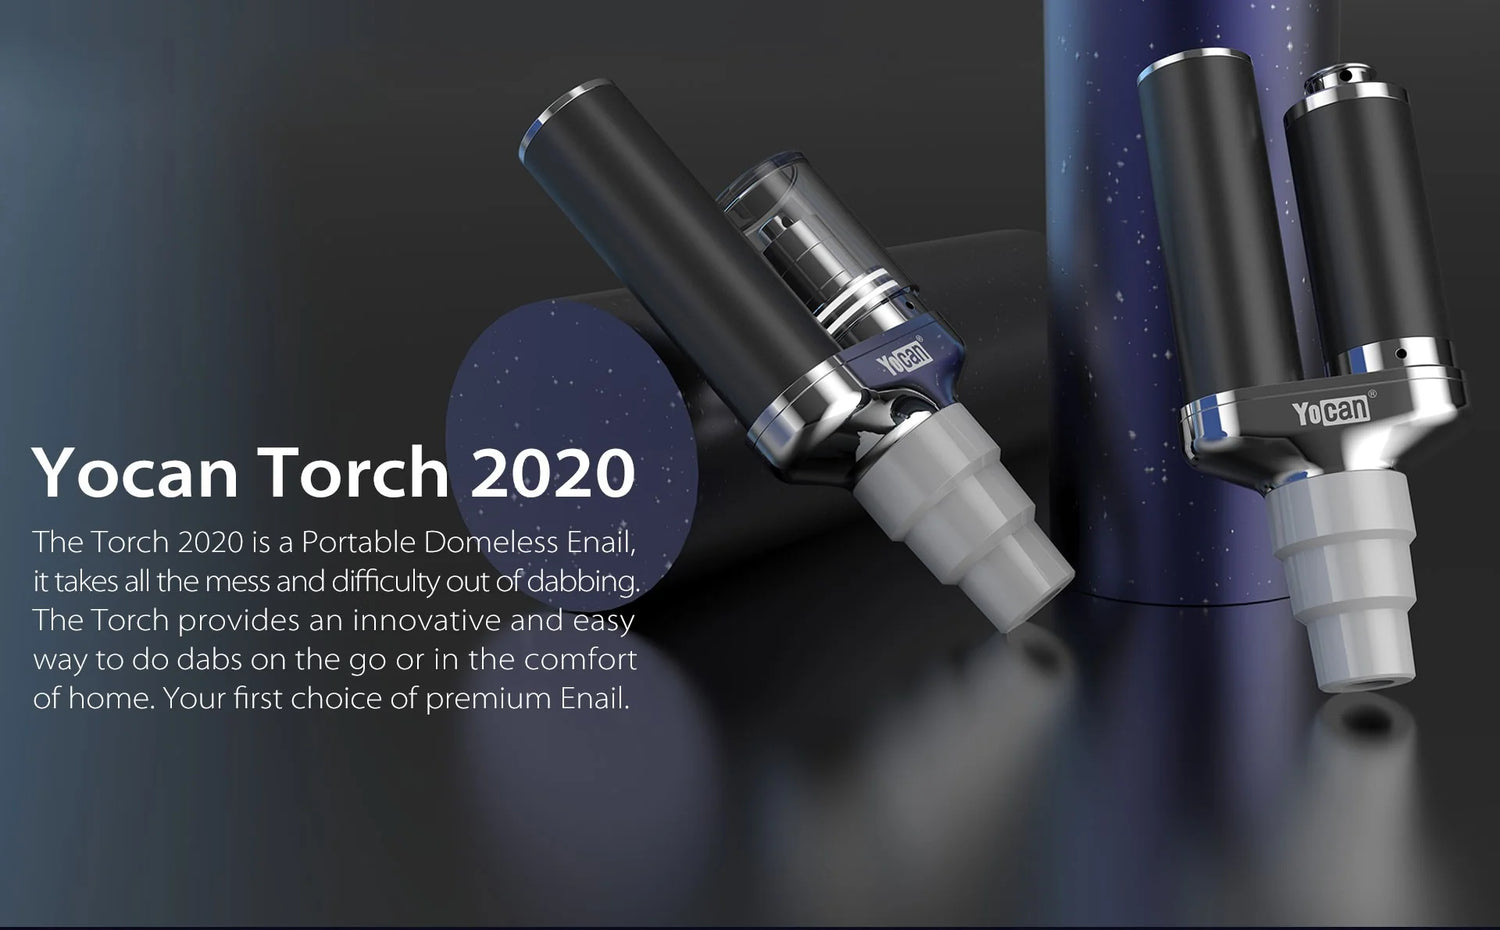 Yocan Torch Portable Enail - 2020 Edition